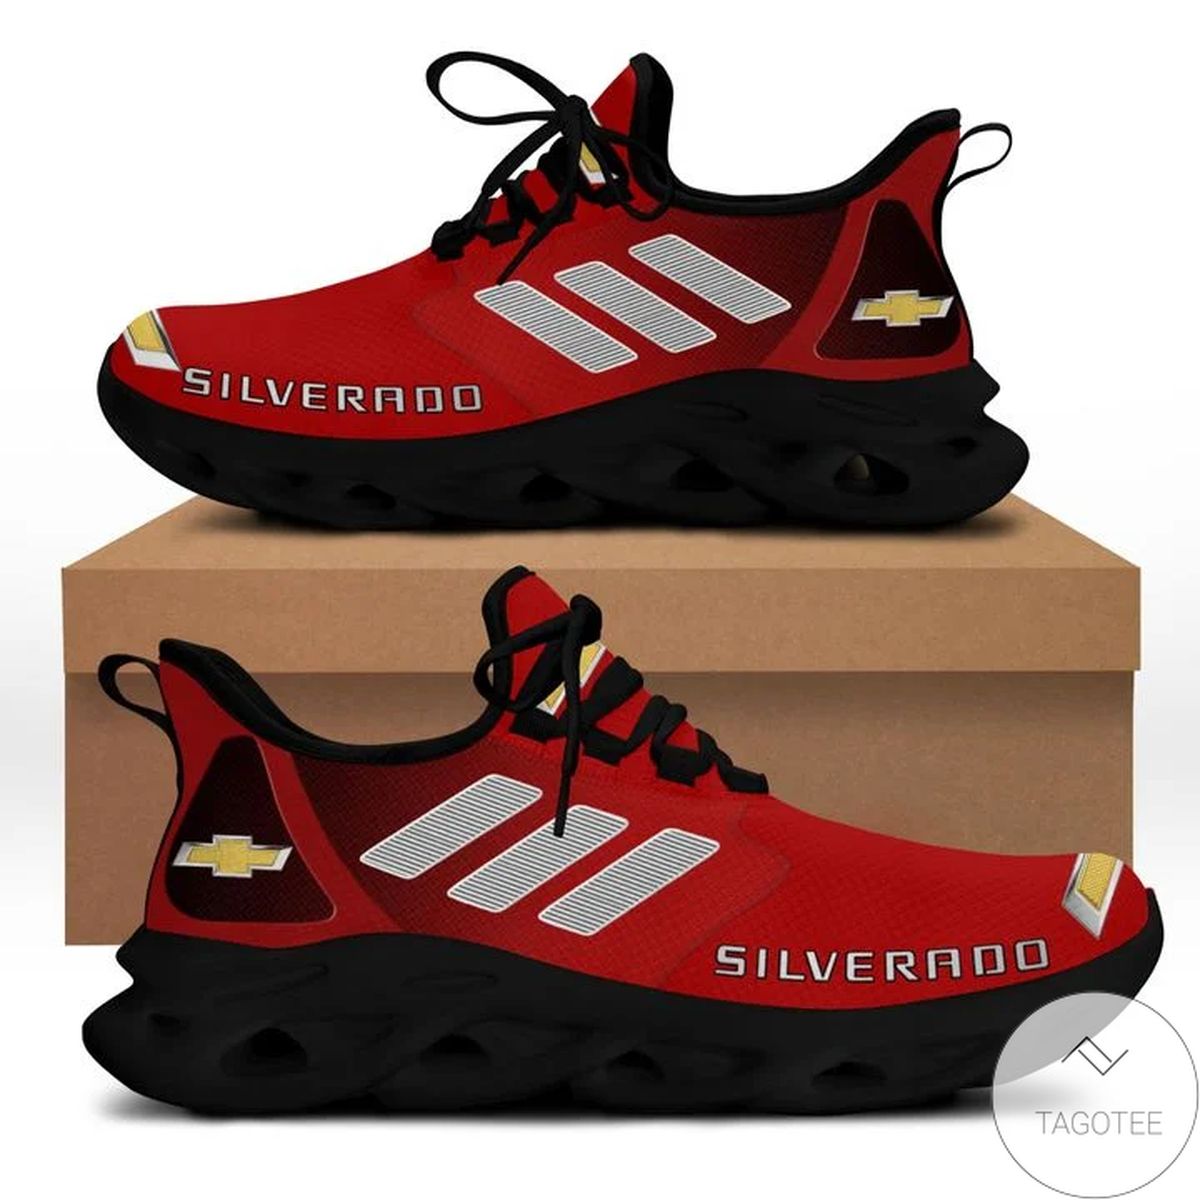 Silverado Red Max Soul Shoes